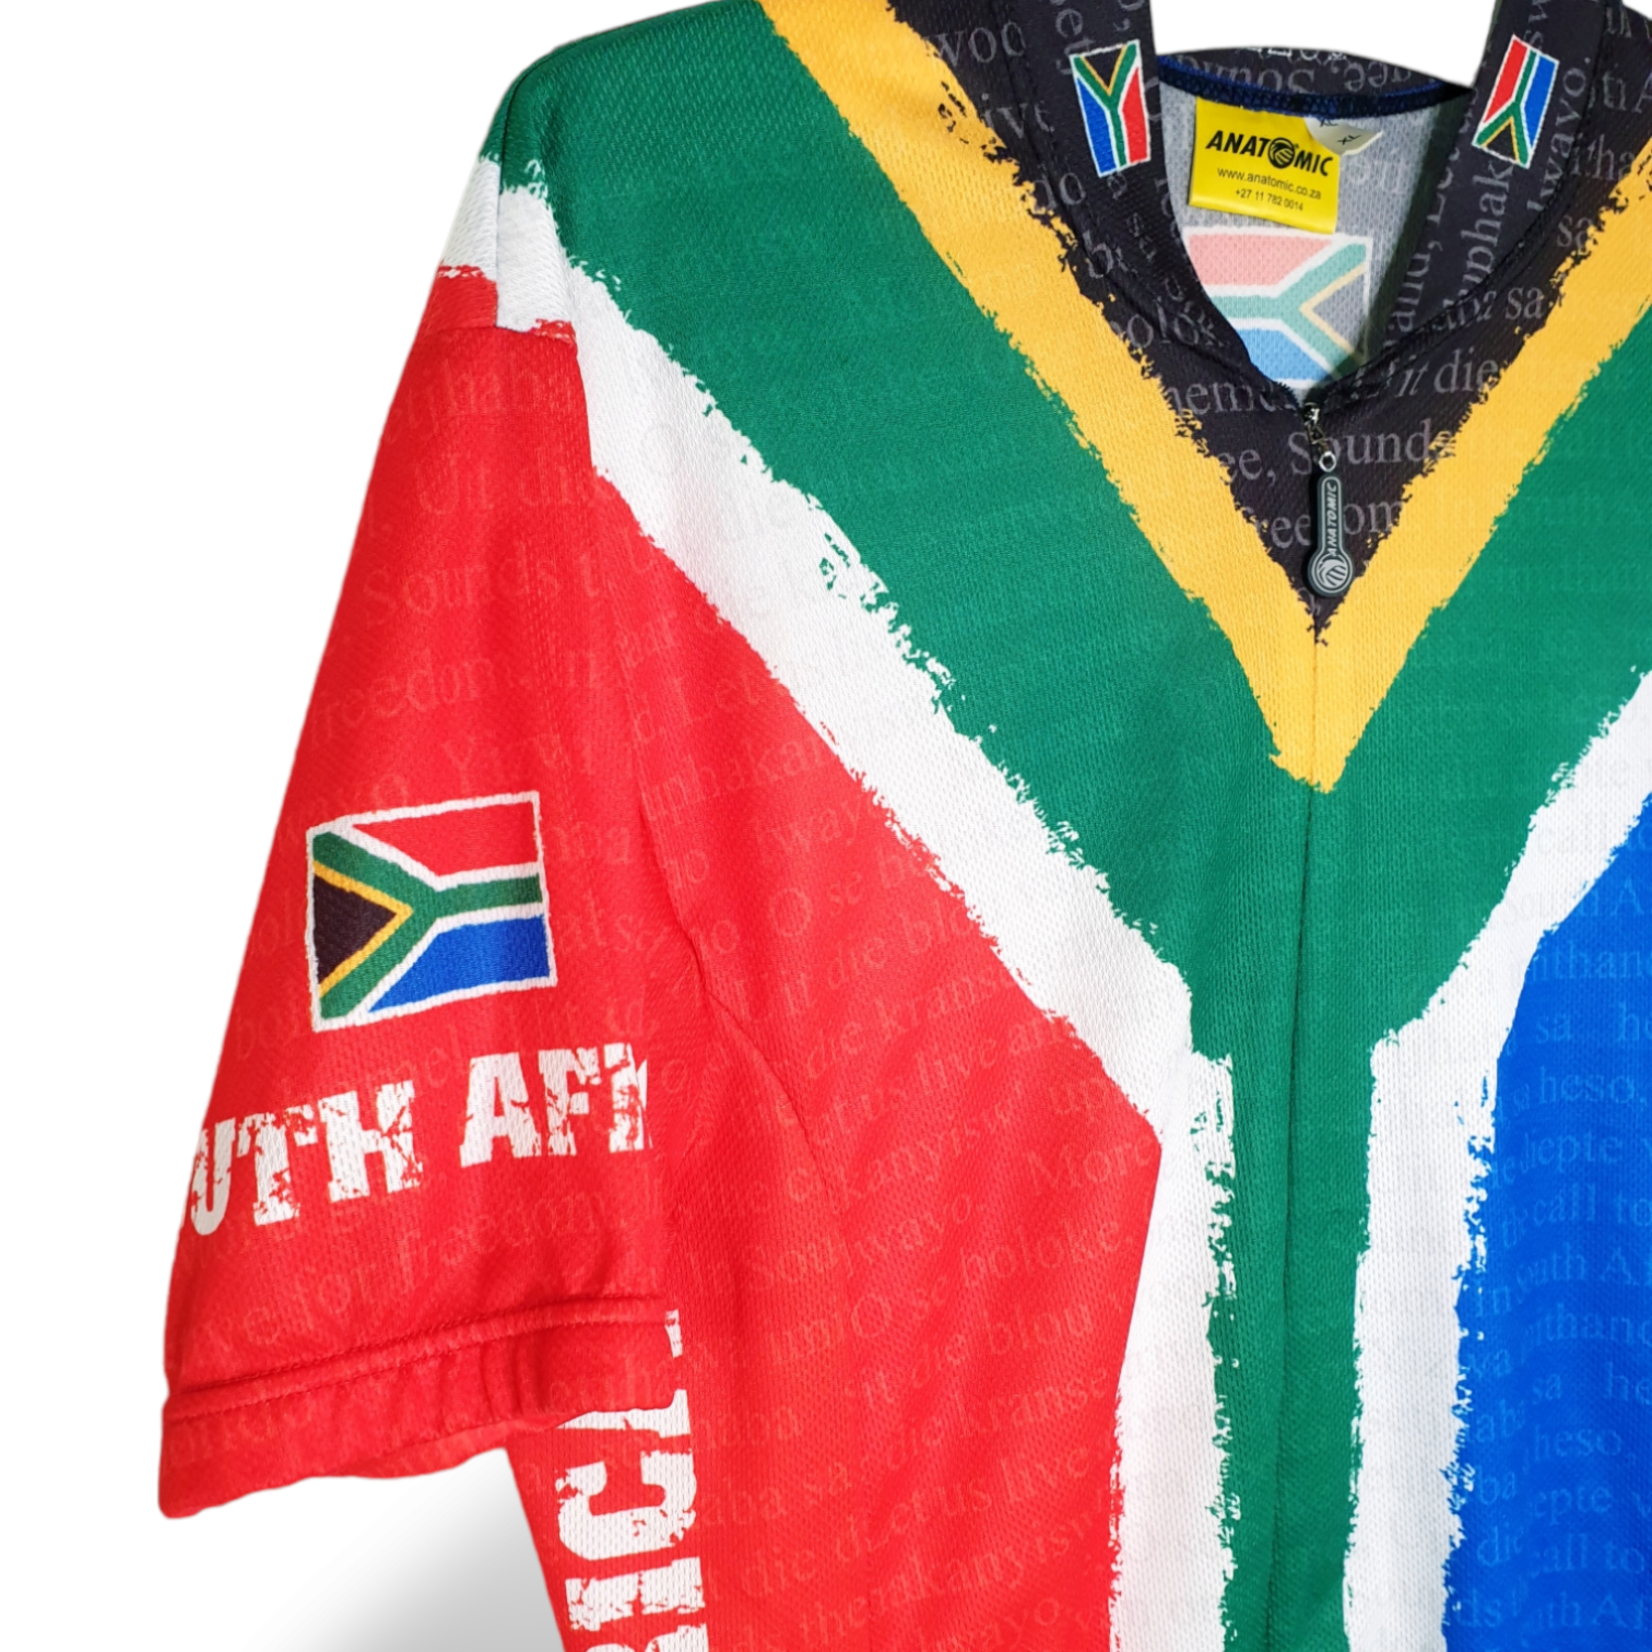 Anatomic Original Anatomic vintage cycling jersey South Africa 2013